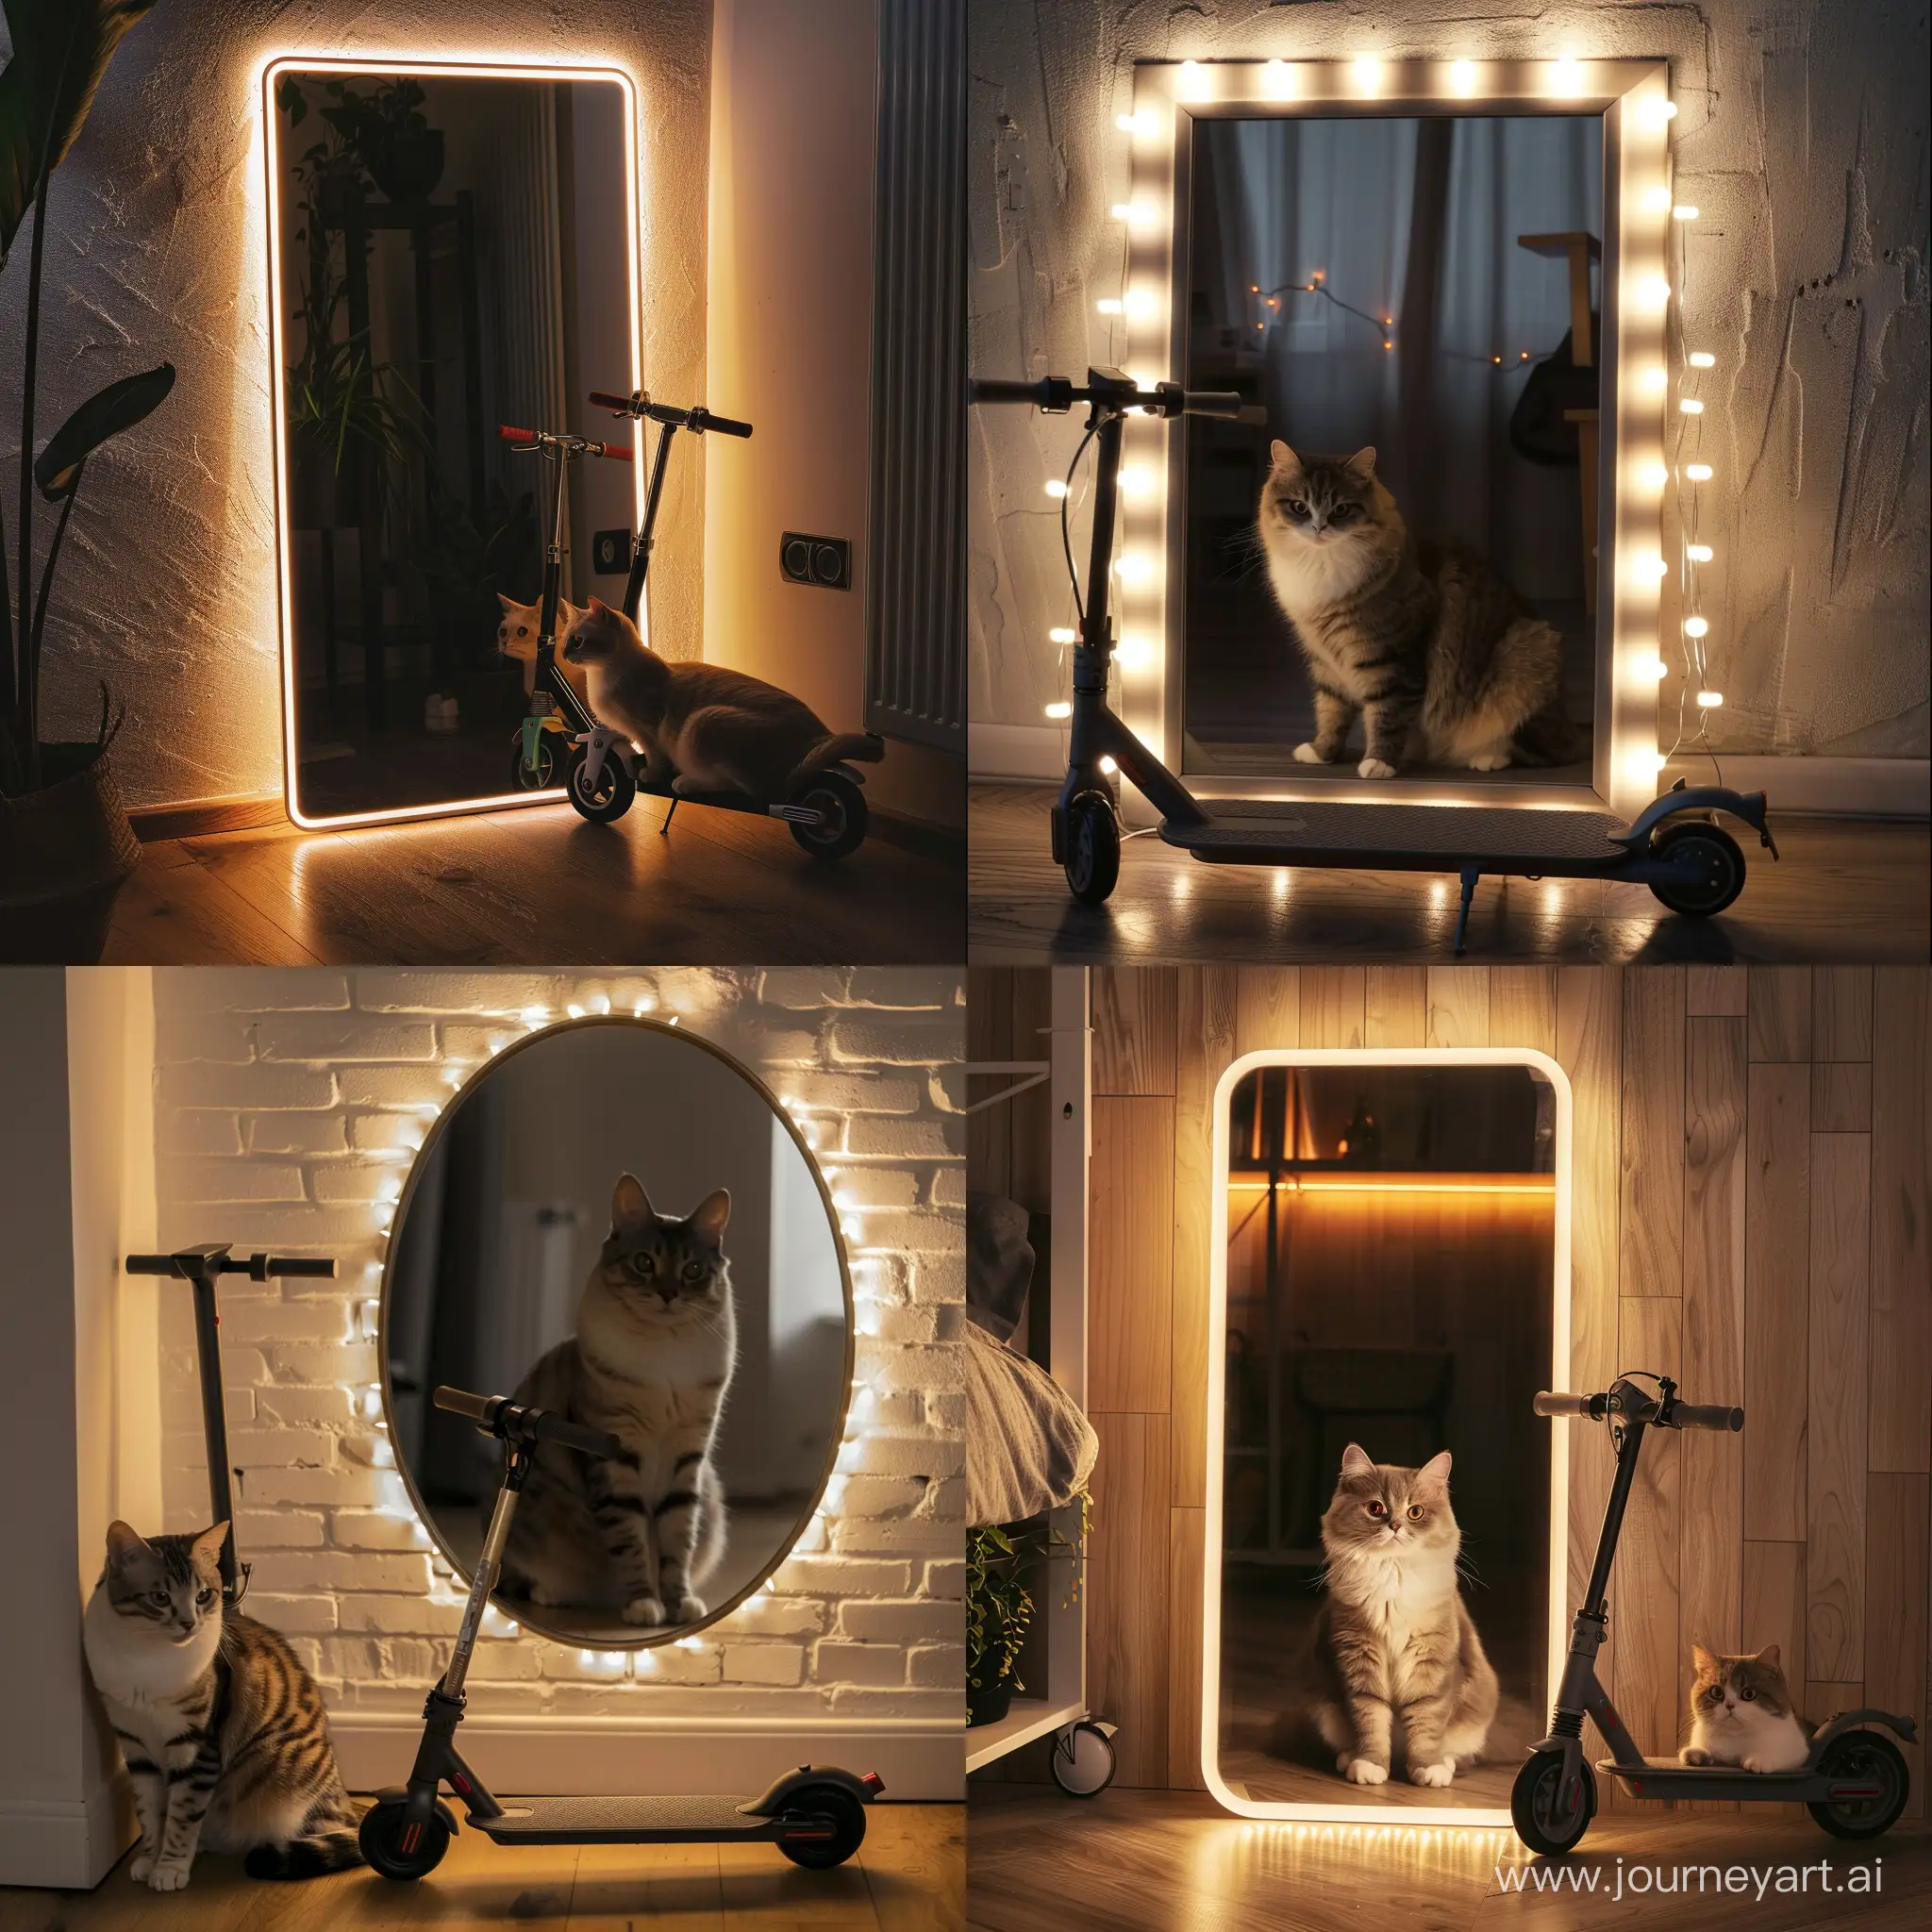 Cat-Riding-Scooter-next-to-Illuminated-Mirror